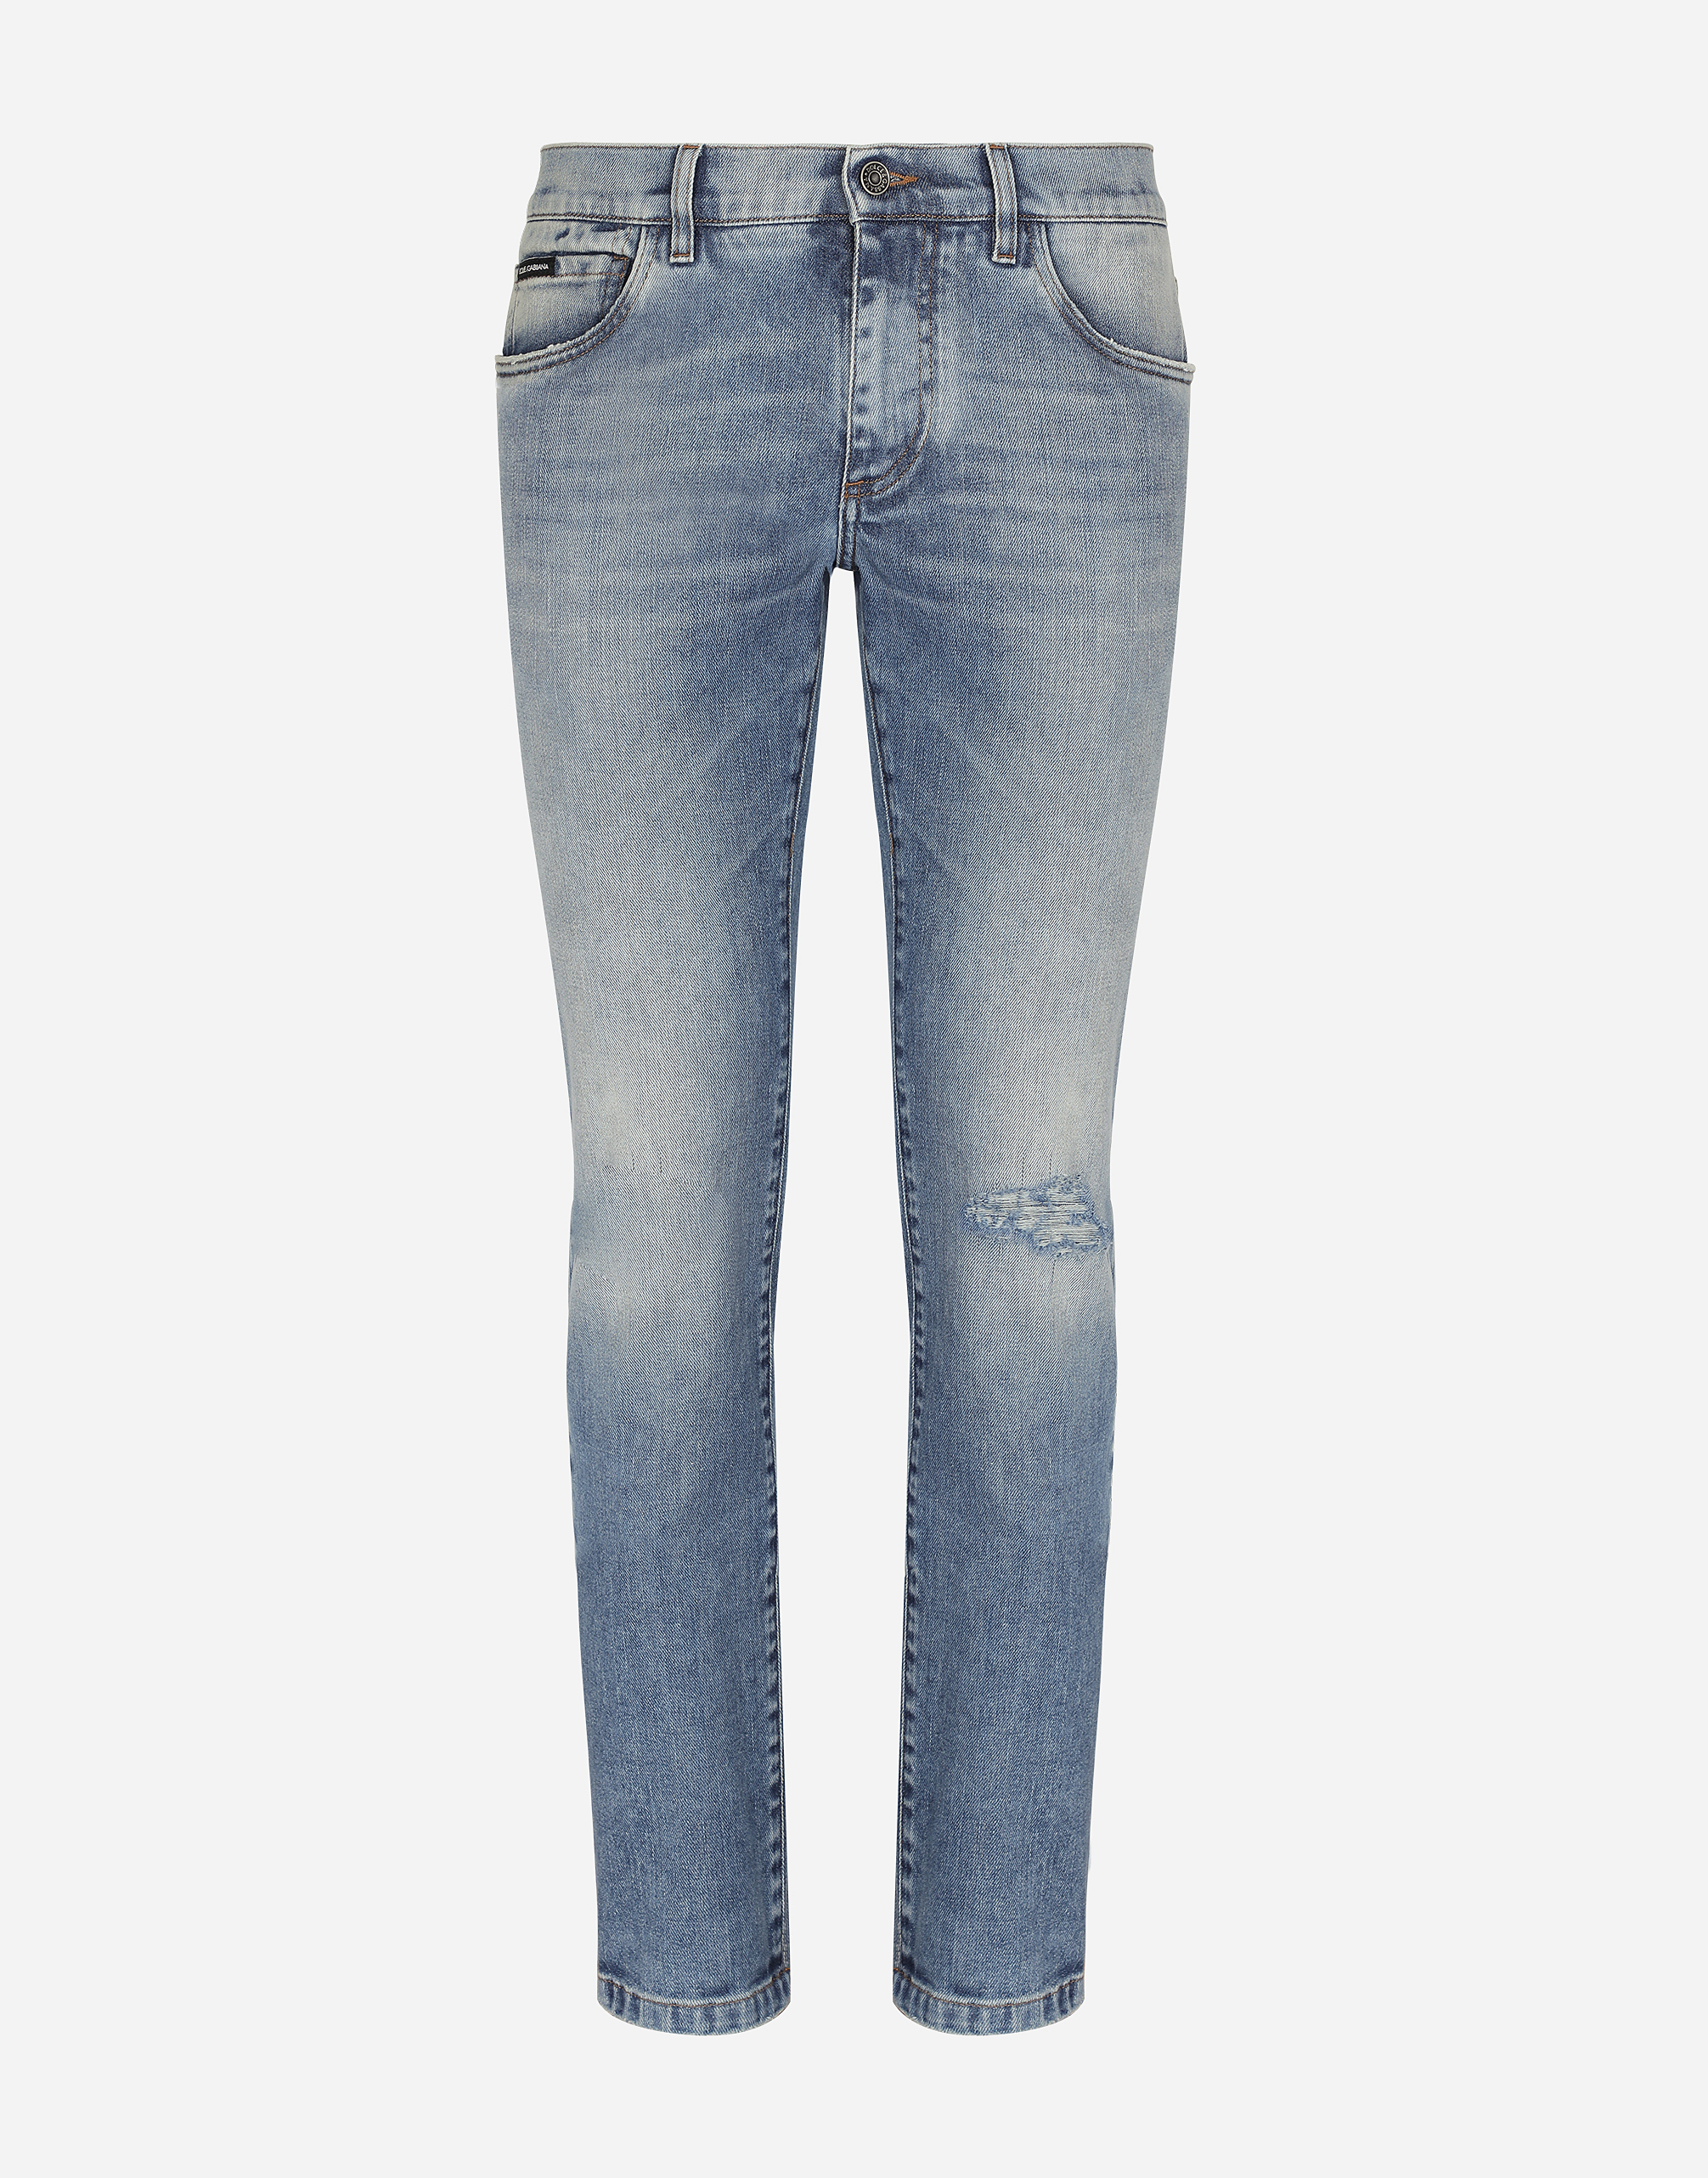 Dolce & Gabbana Light Blue Skinny Stretch Jeans With Rips